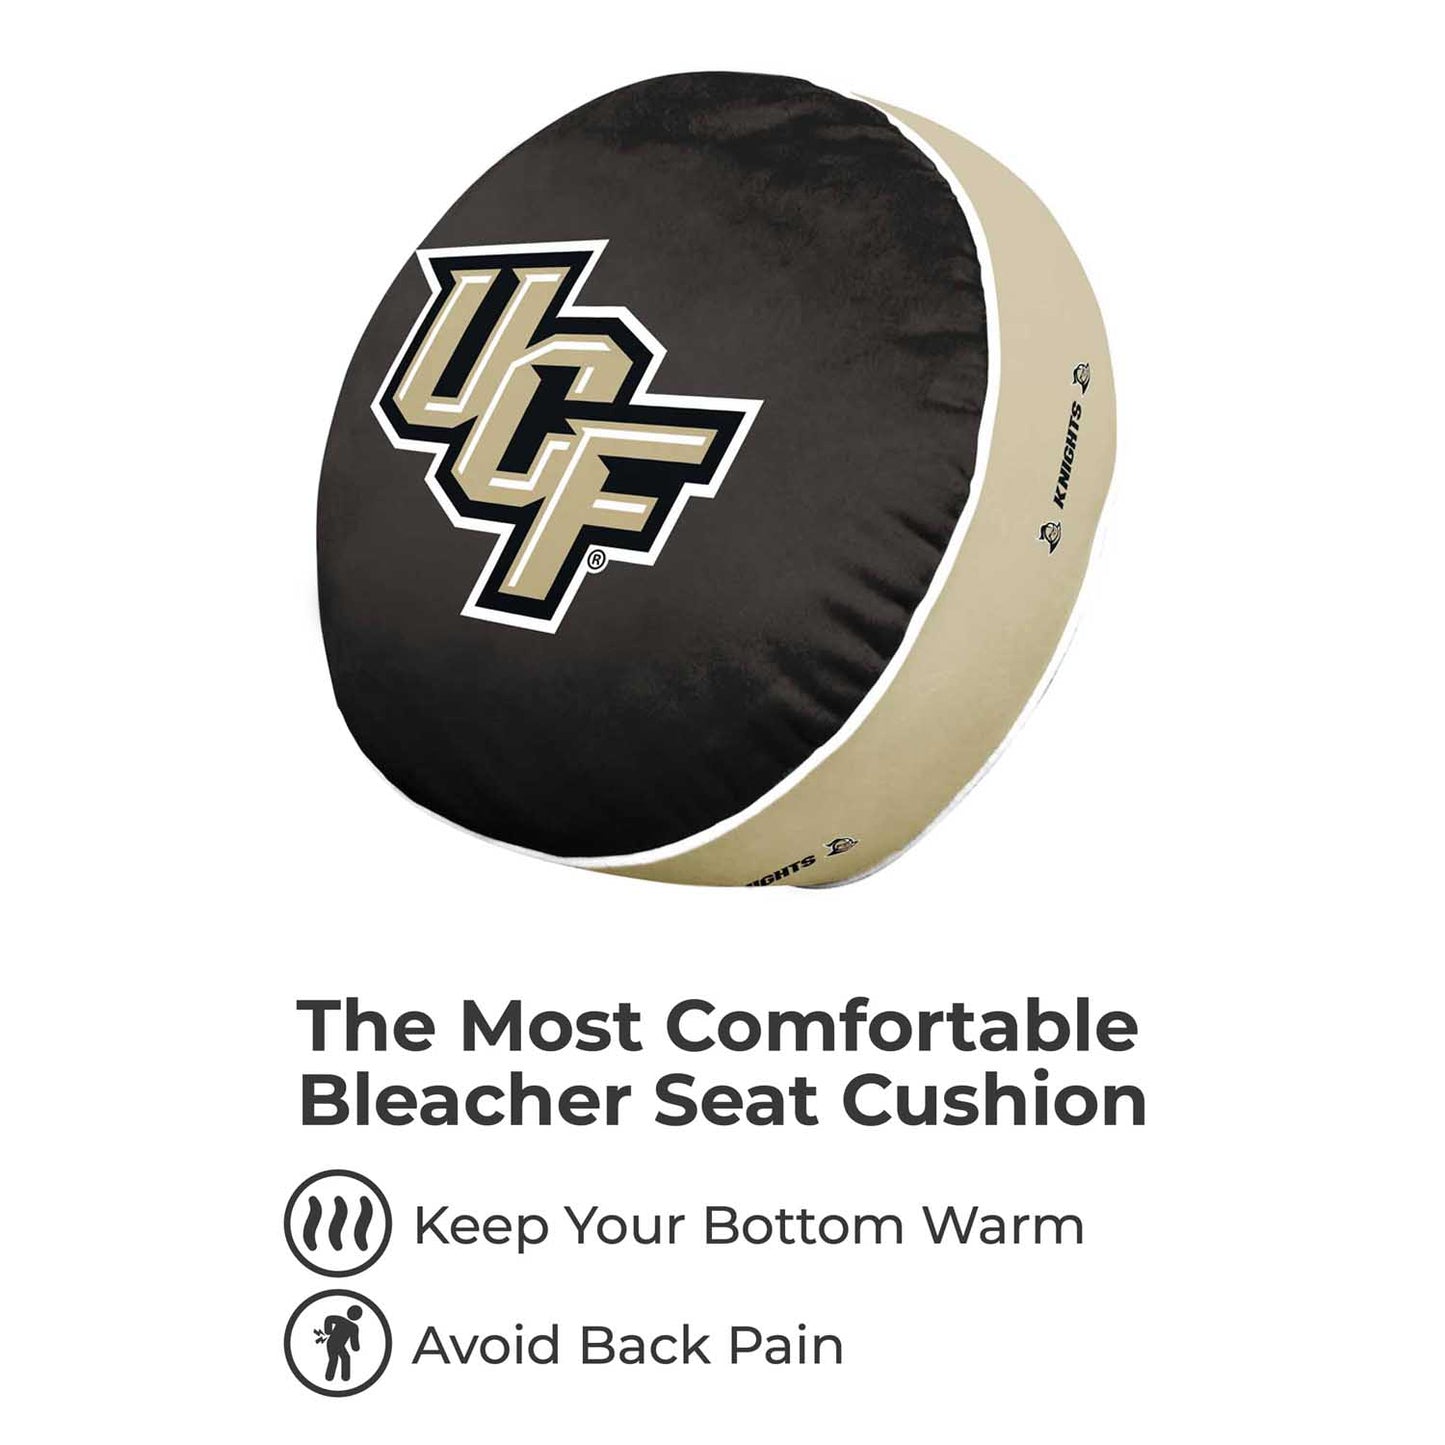 Central Florida Knights Team Logo 15 Inch Ultra Soft Stretch Plush Pillow - Black